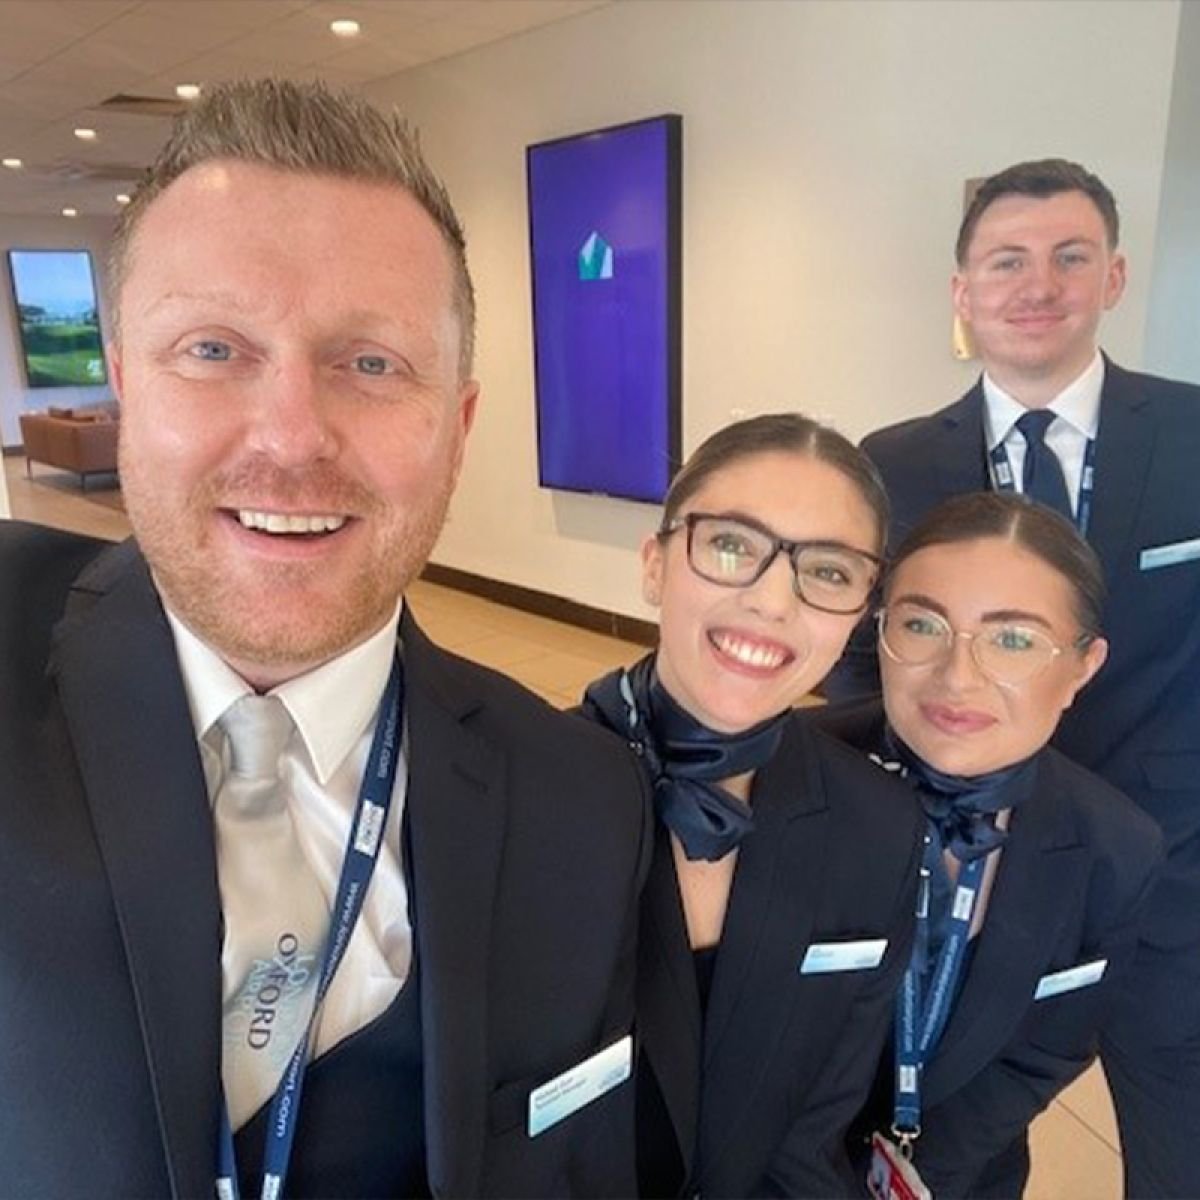 Staff at London Oxford Airport in new uniform - 2 men, 2 ladies - selfie style